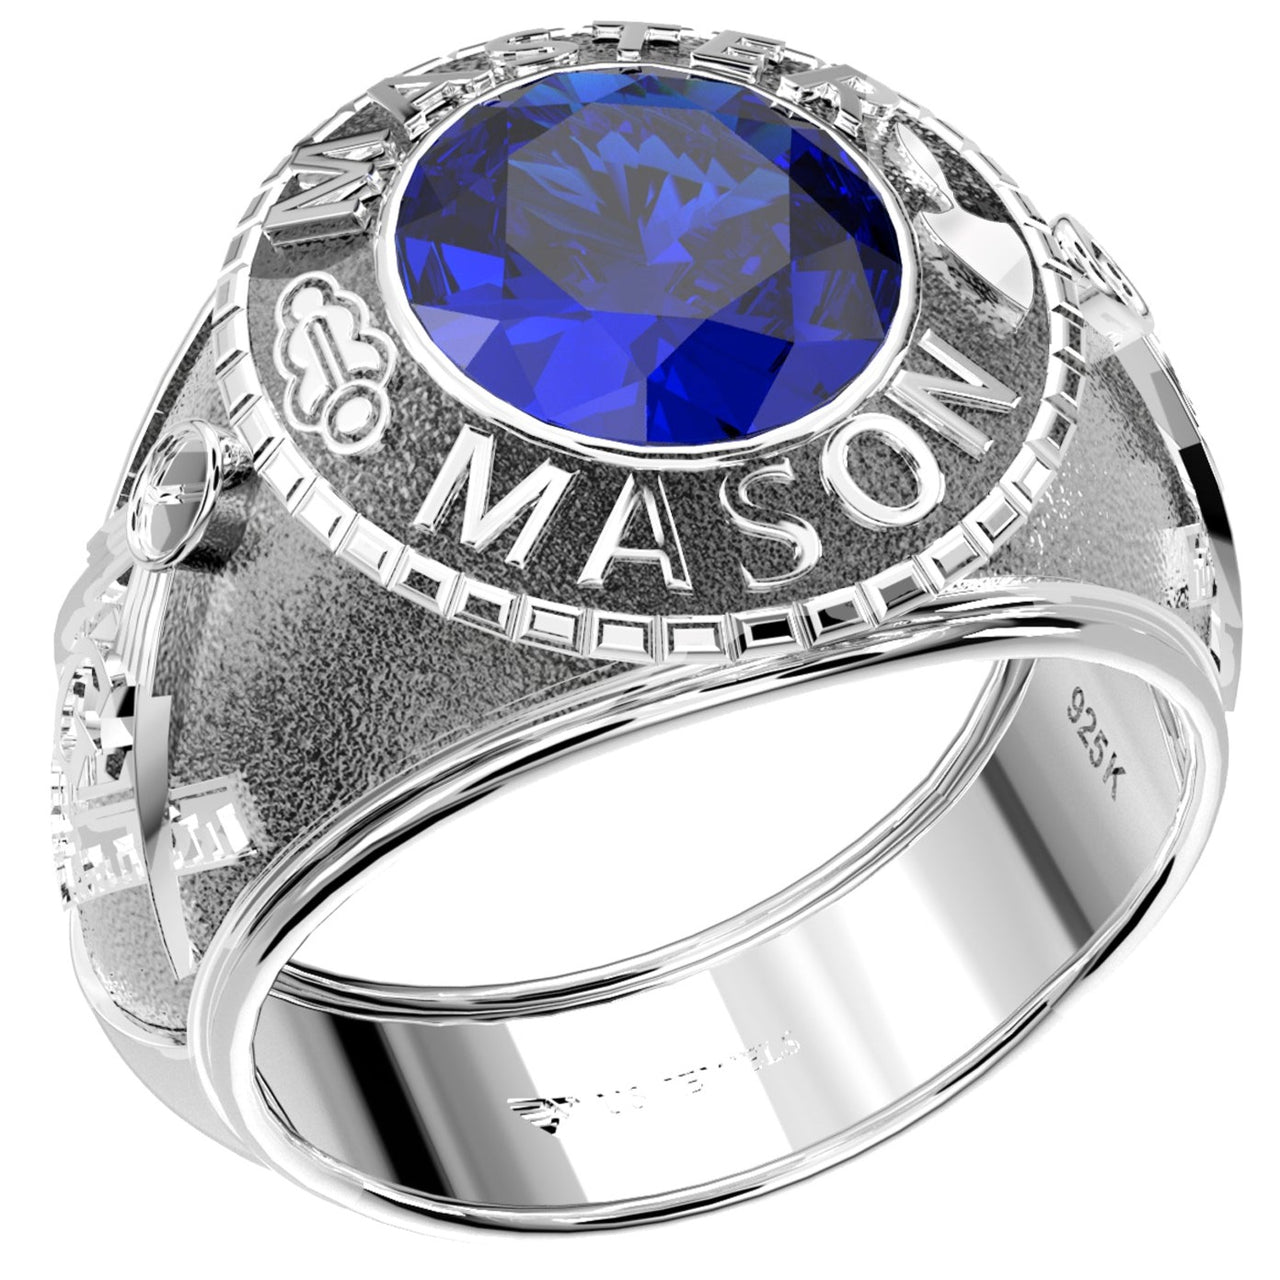 Men's Heavy Solid 925 Sterling Silver Freemason Master Mason Class Ring Oxidized